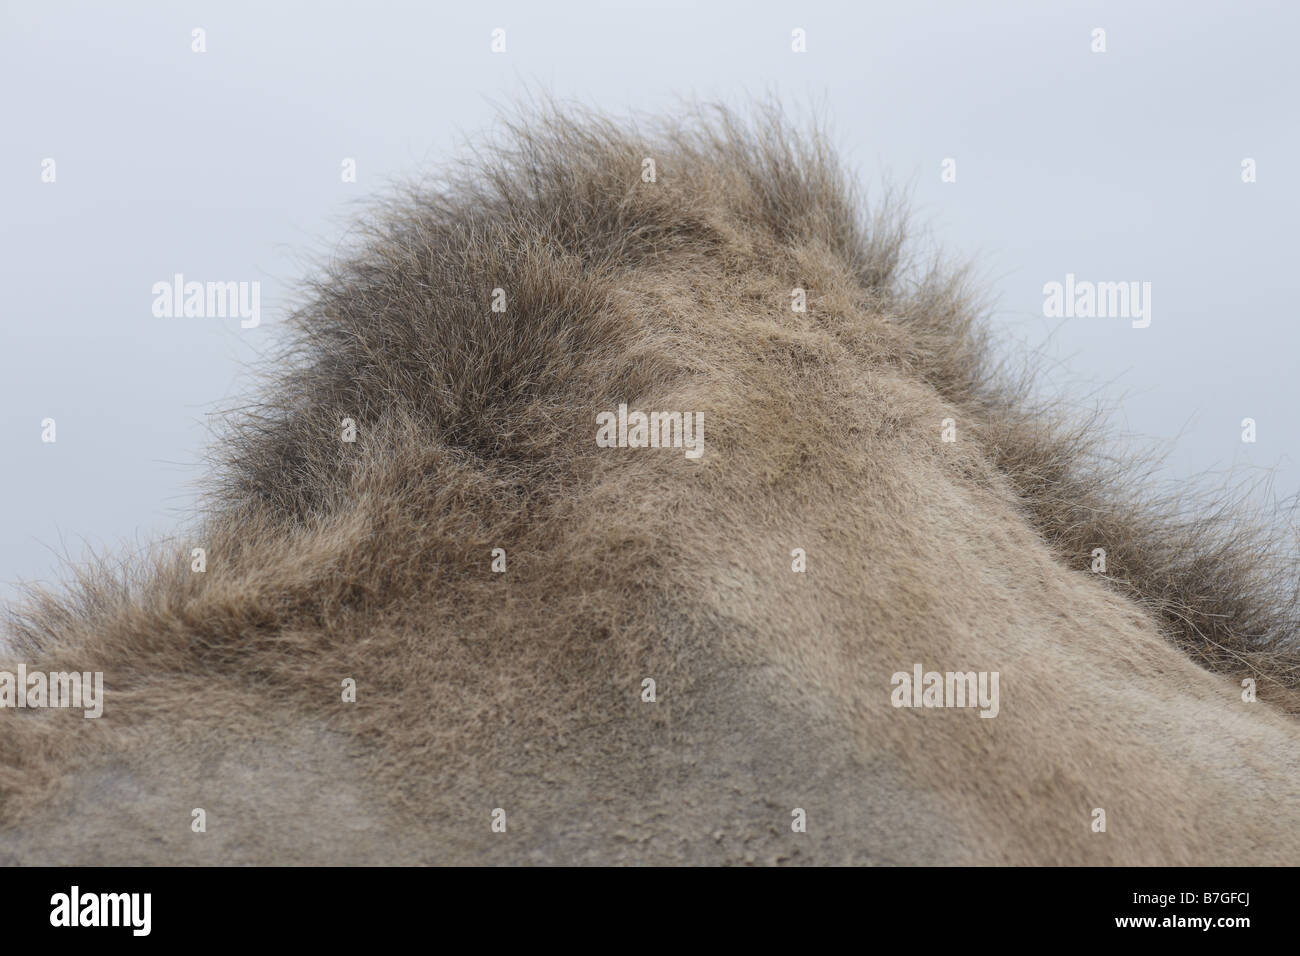 a dromedary camel camel's hump and fur Stock Photo